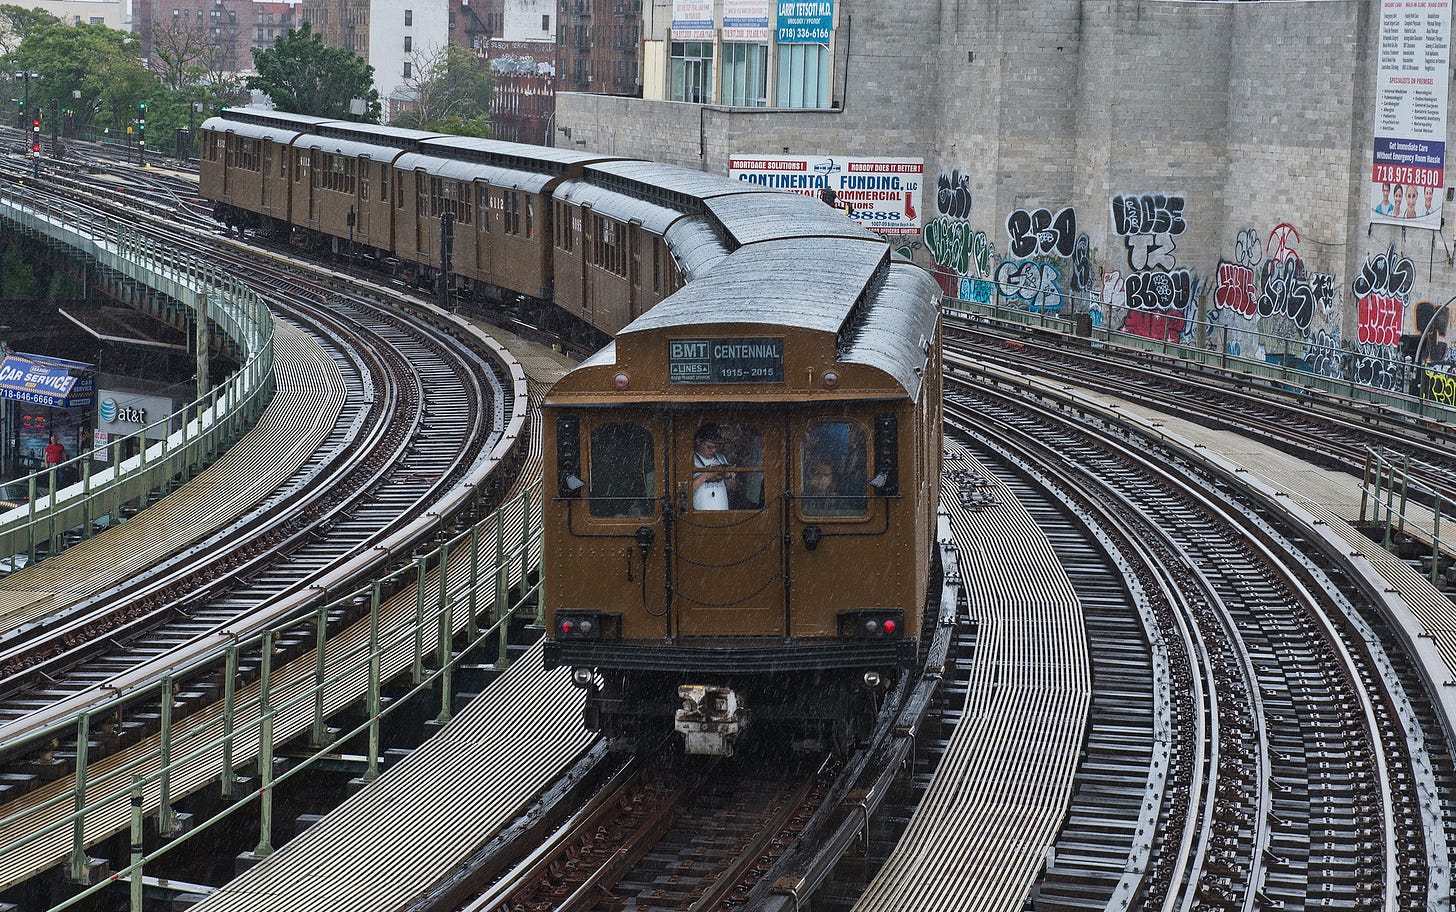 D-type Triplex (New York City Subway car) - Wikipedia